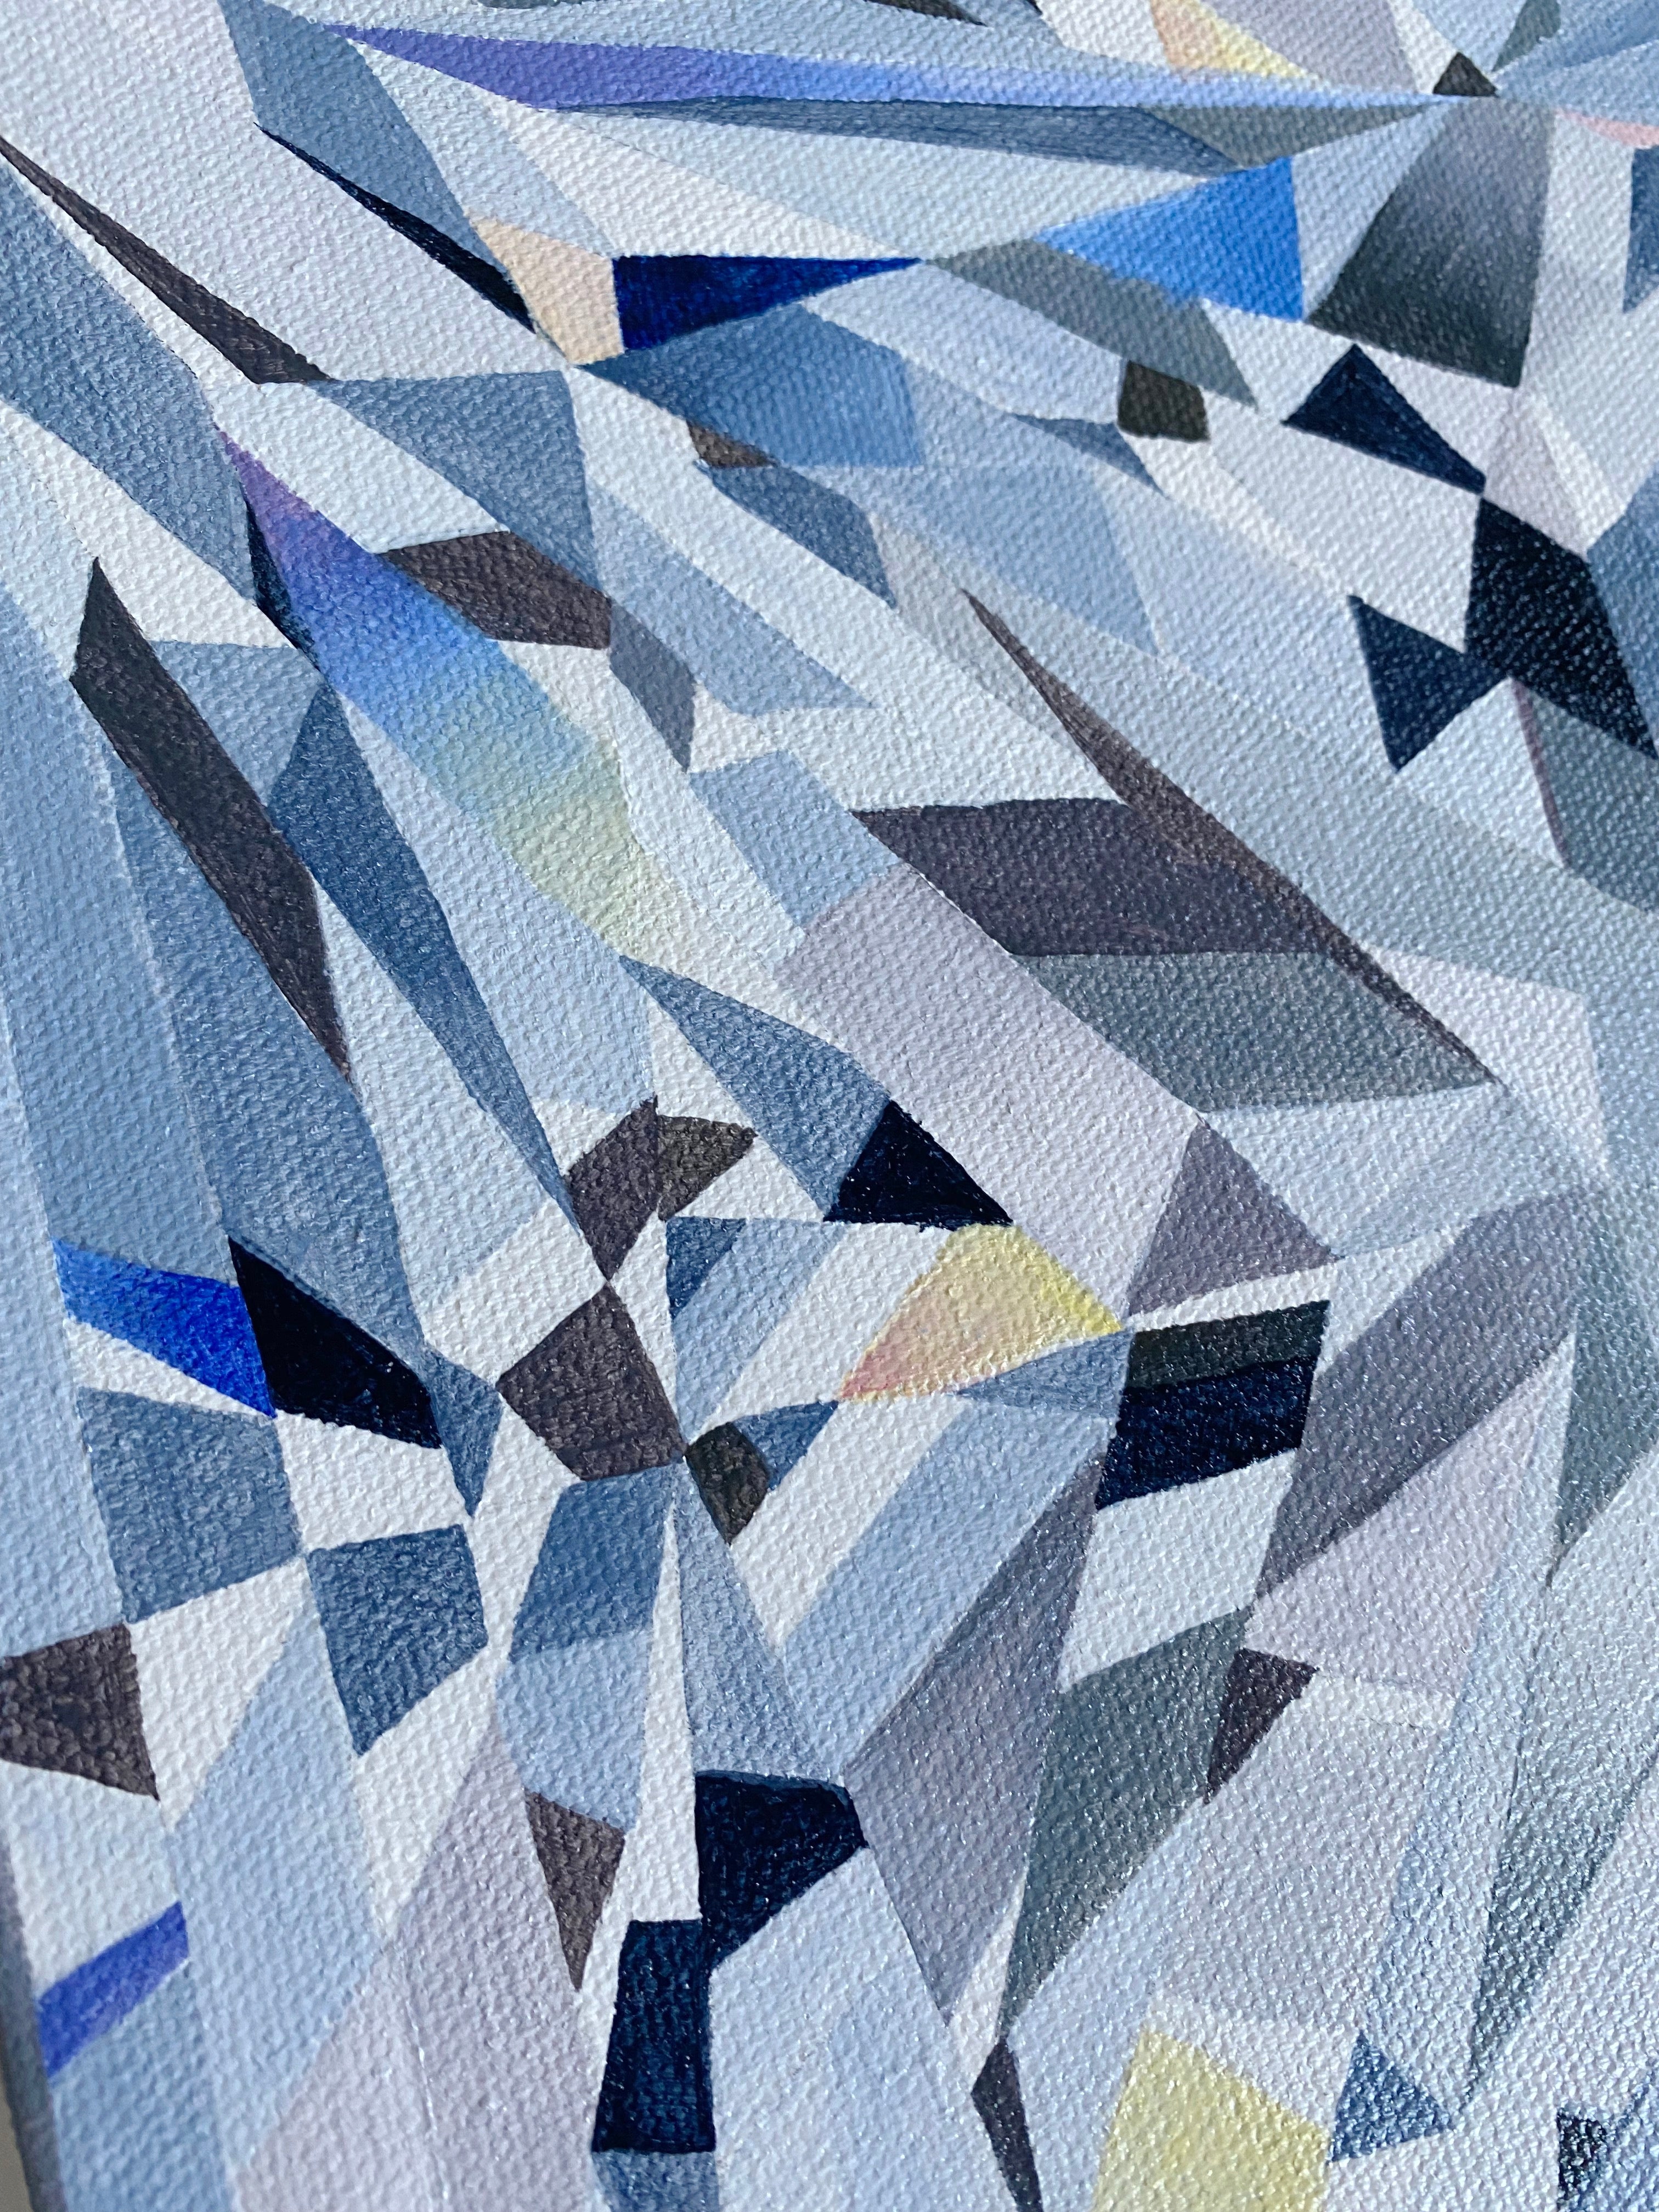 Diamond Princess Cut Abstract Acrylic Painting - Original Painting 12 x 12 inches